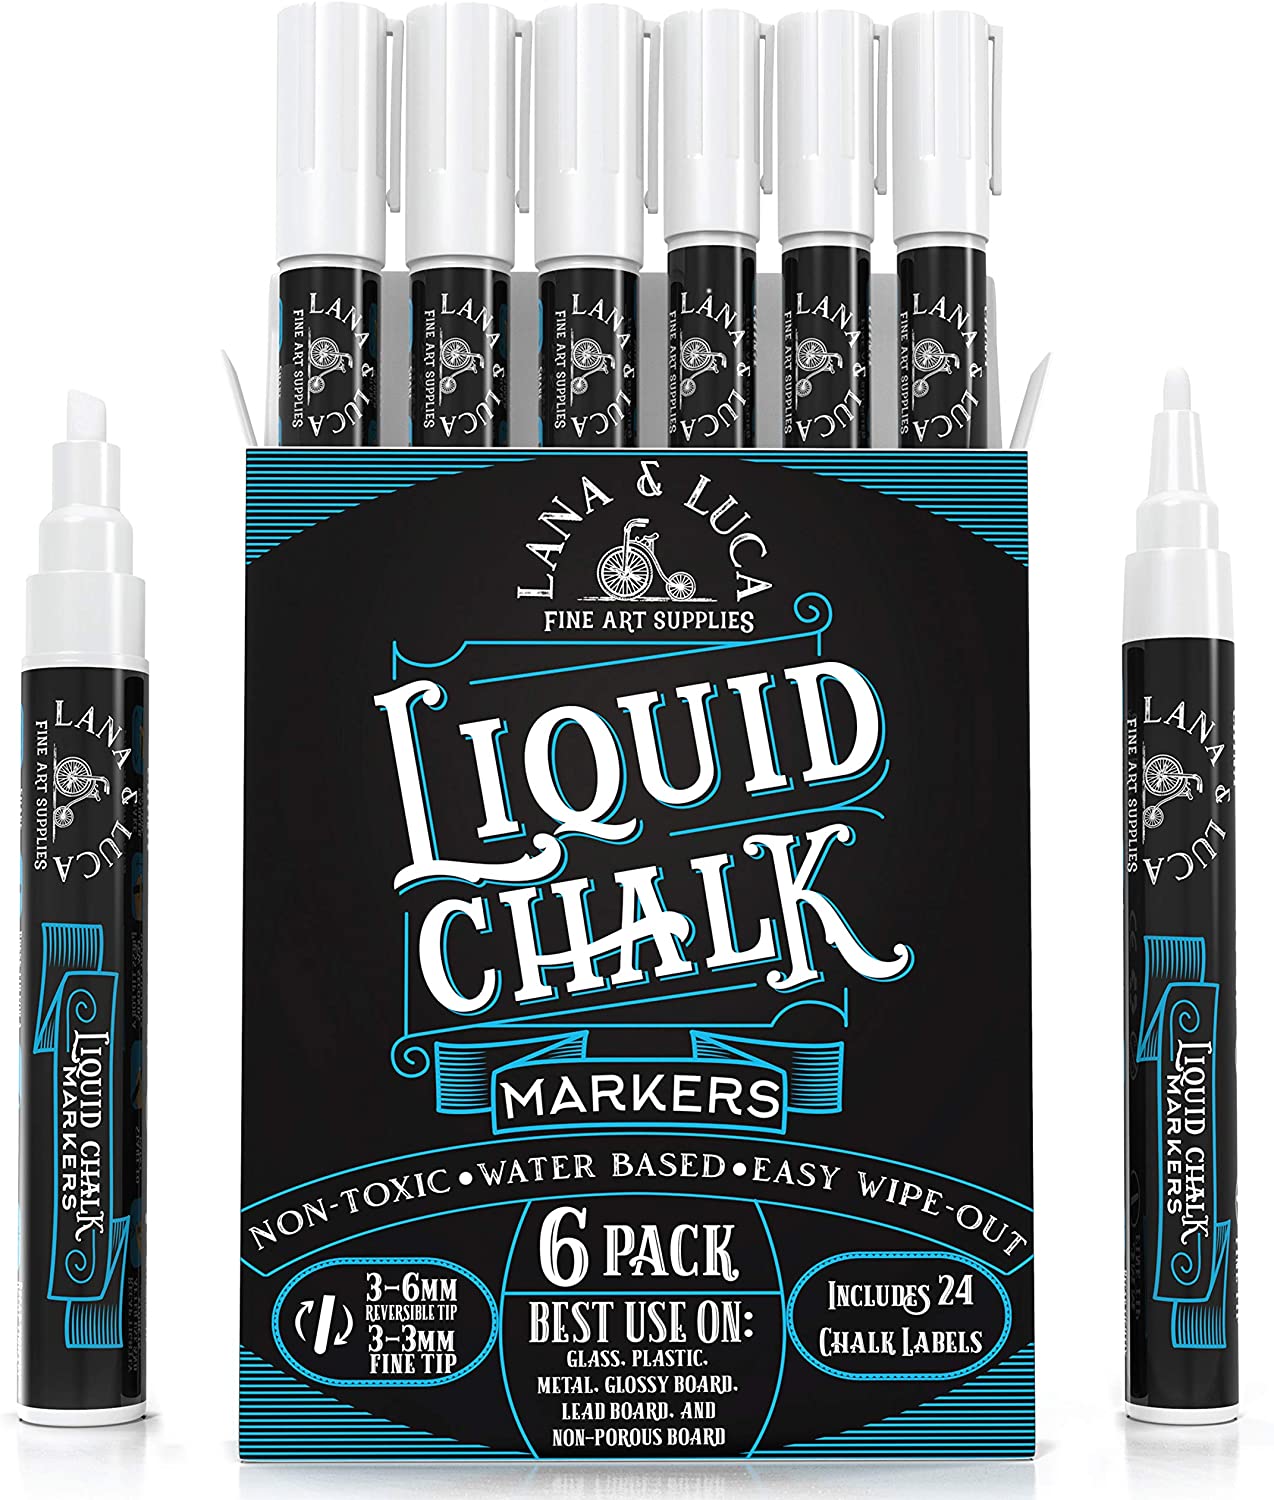 Lana & Luca Liquid Chalk Markers Pen - White Dry Erase Marker for  Chalkboard Signs, Windows & More